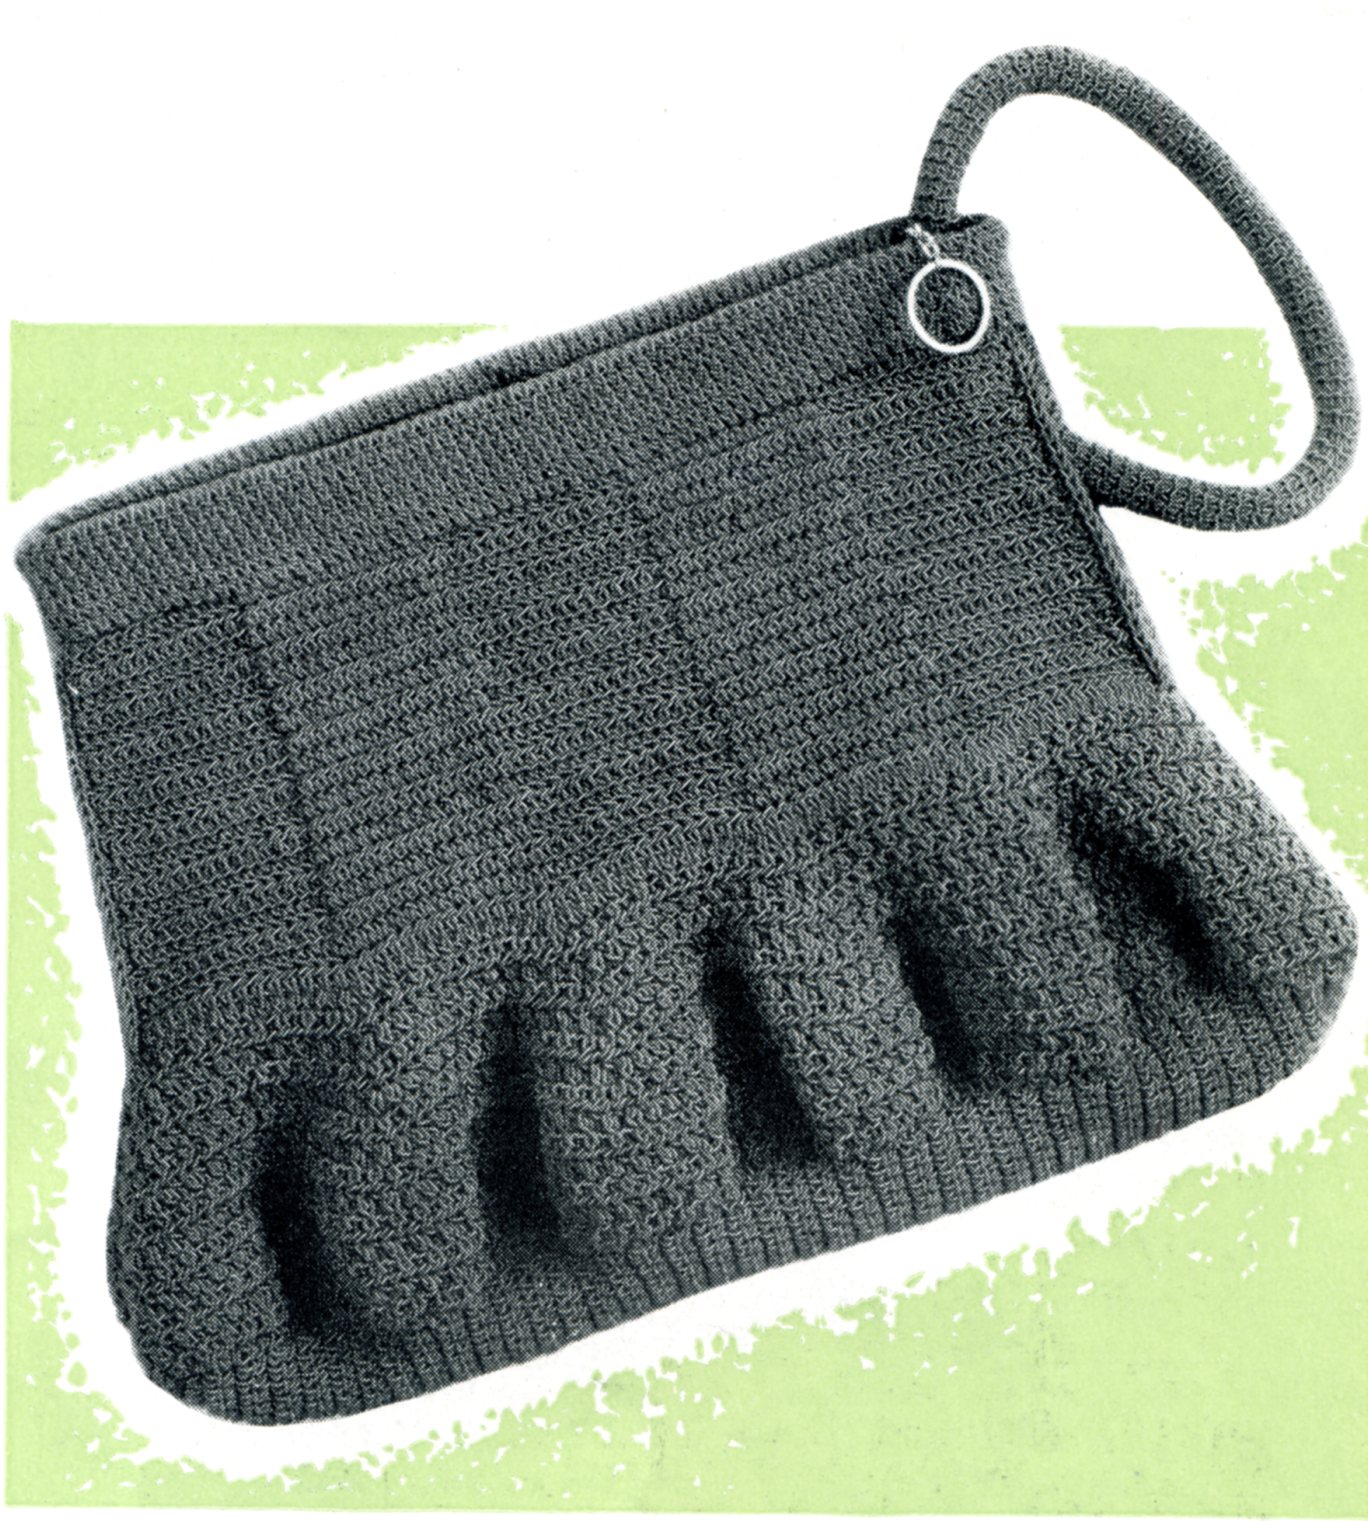 Free cat schoolbag crochet pattern ~ Amigurumi crochet patterns